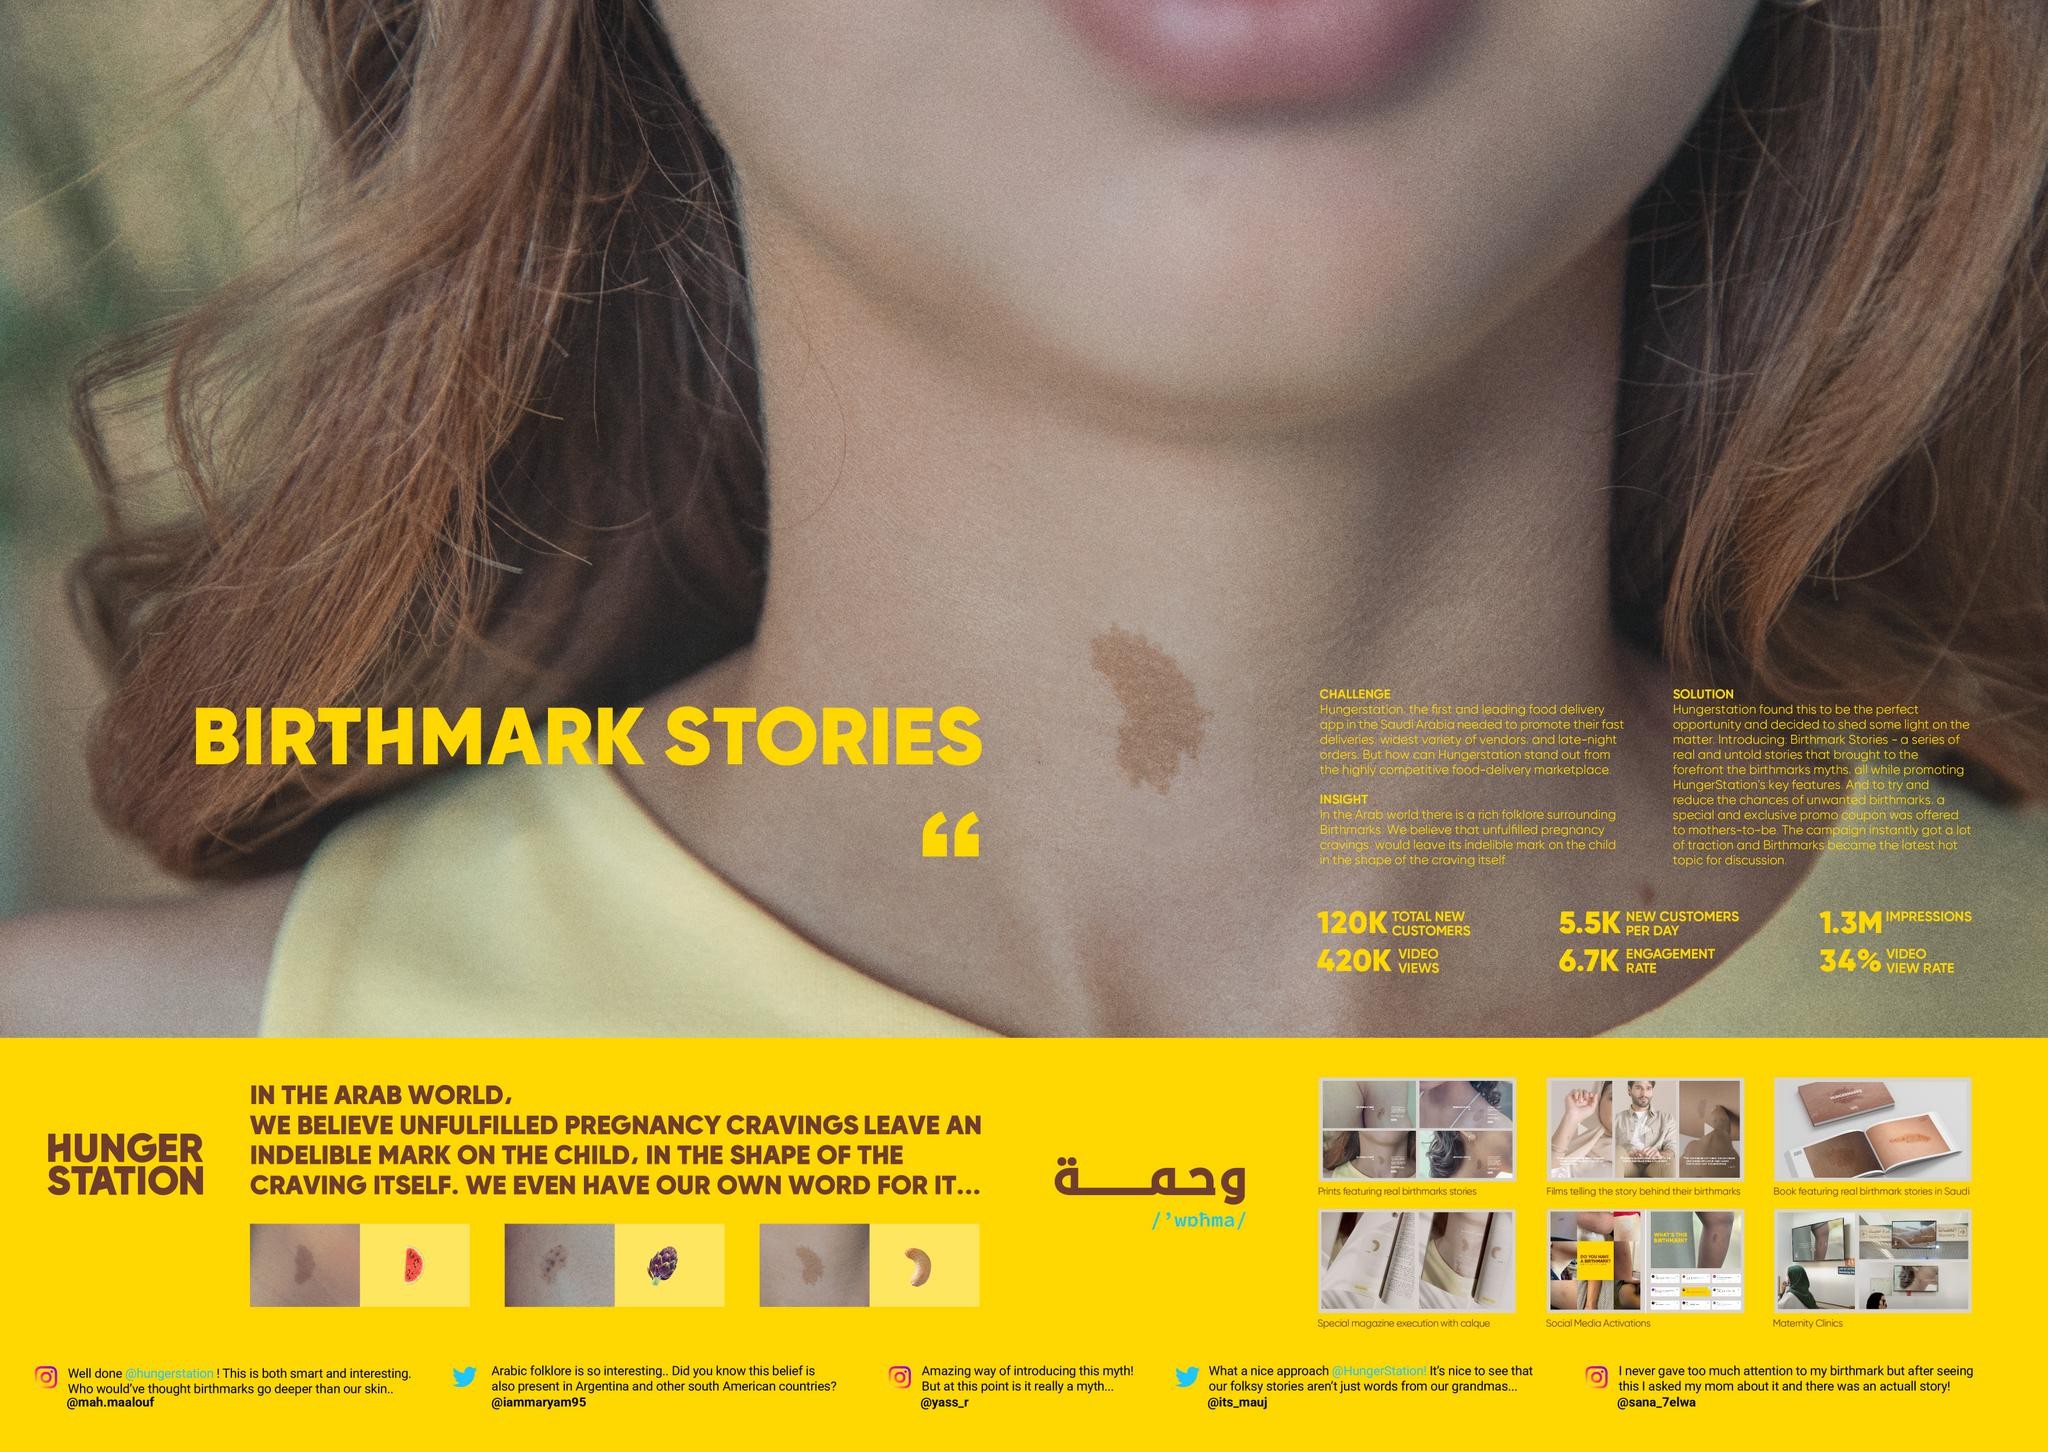 Birthmark Stories